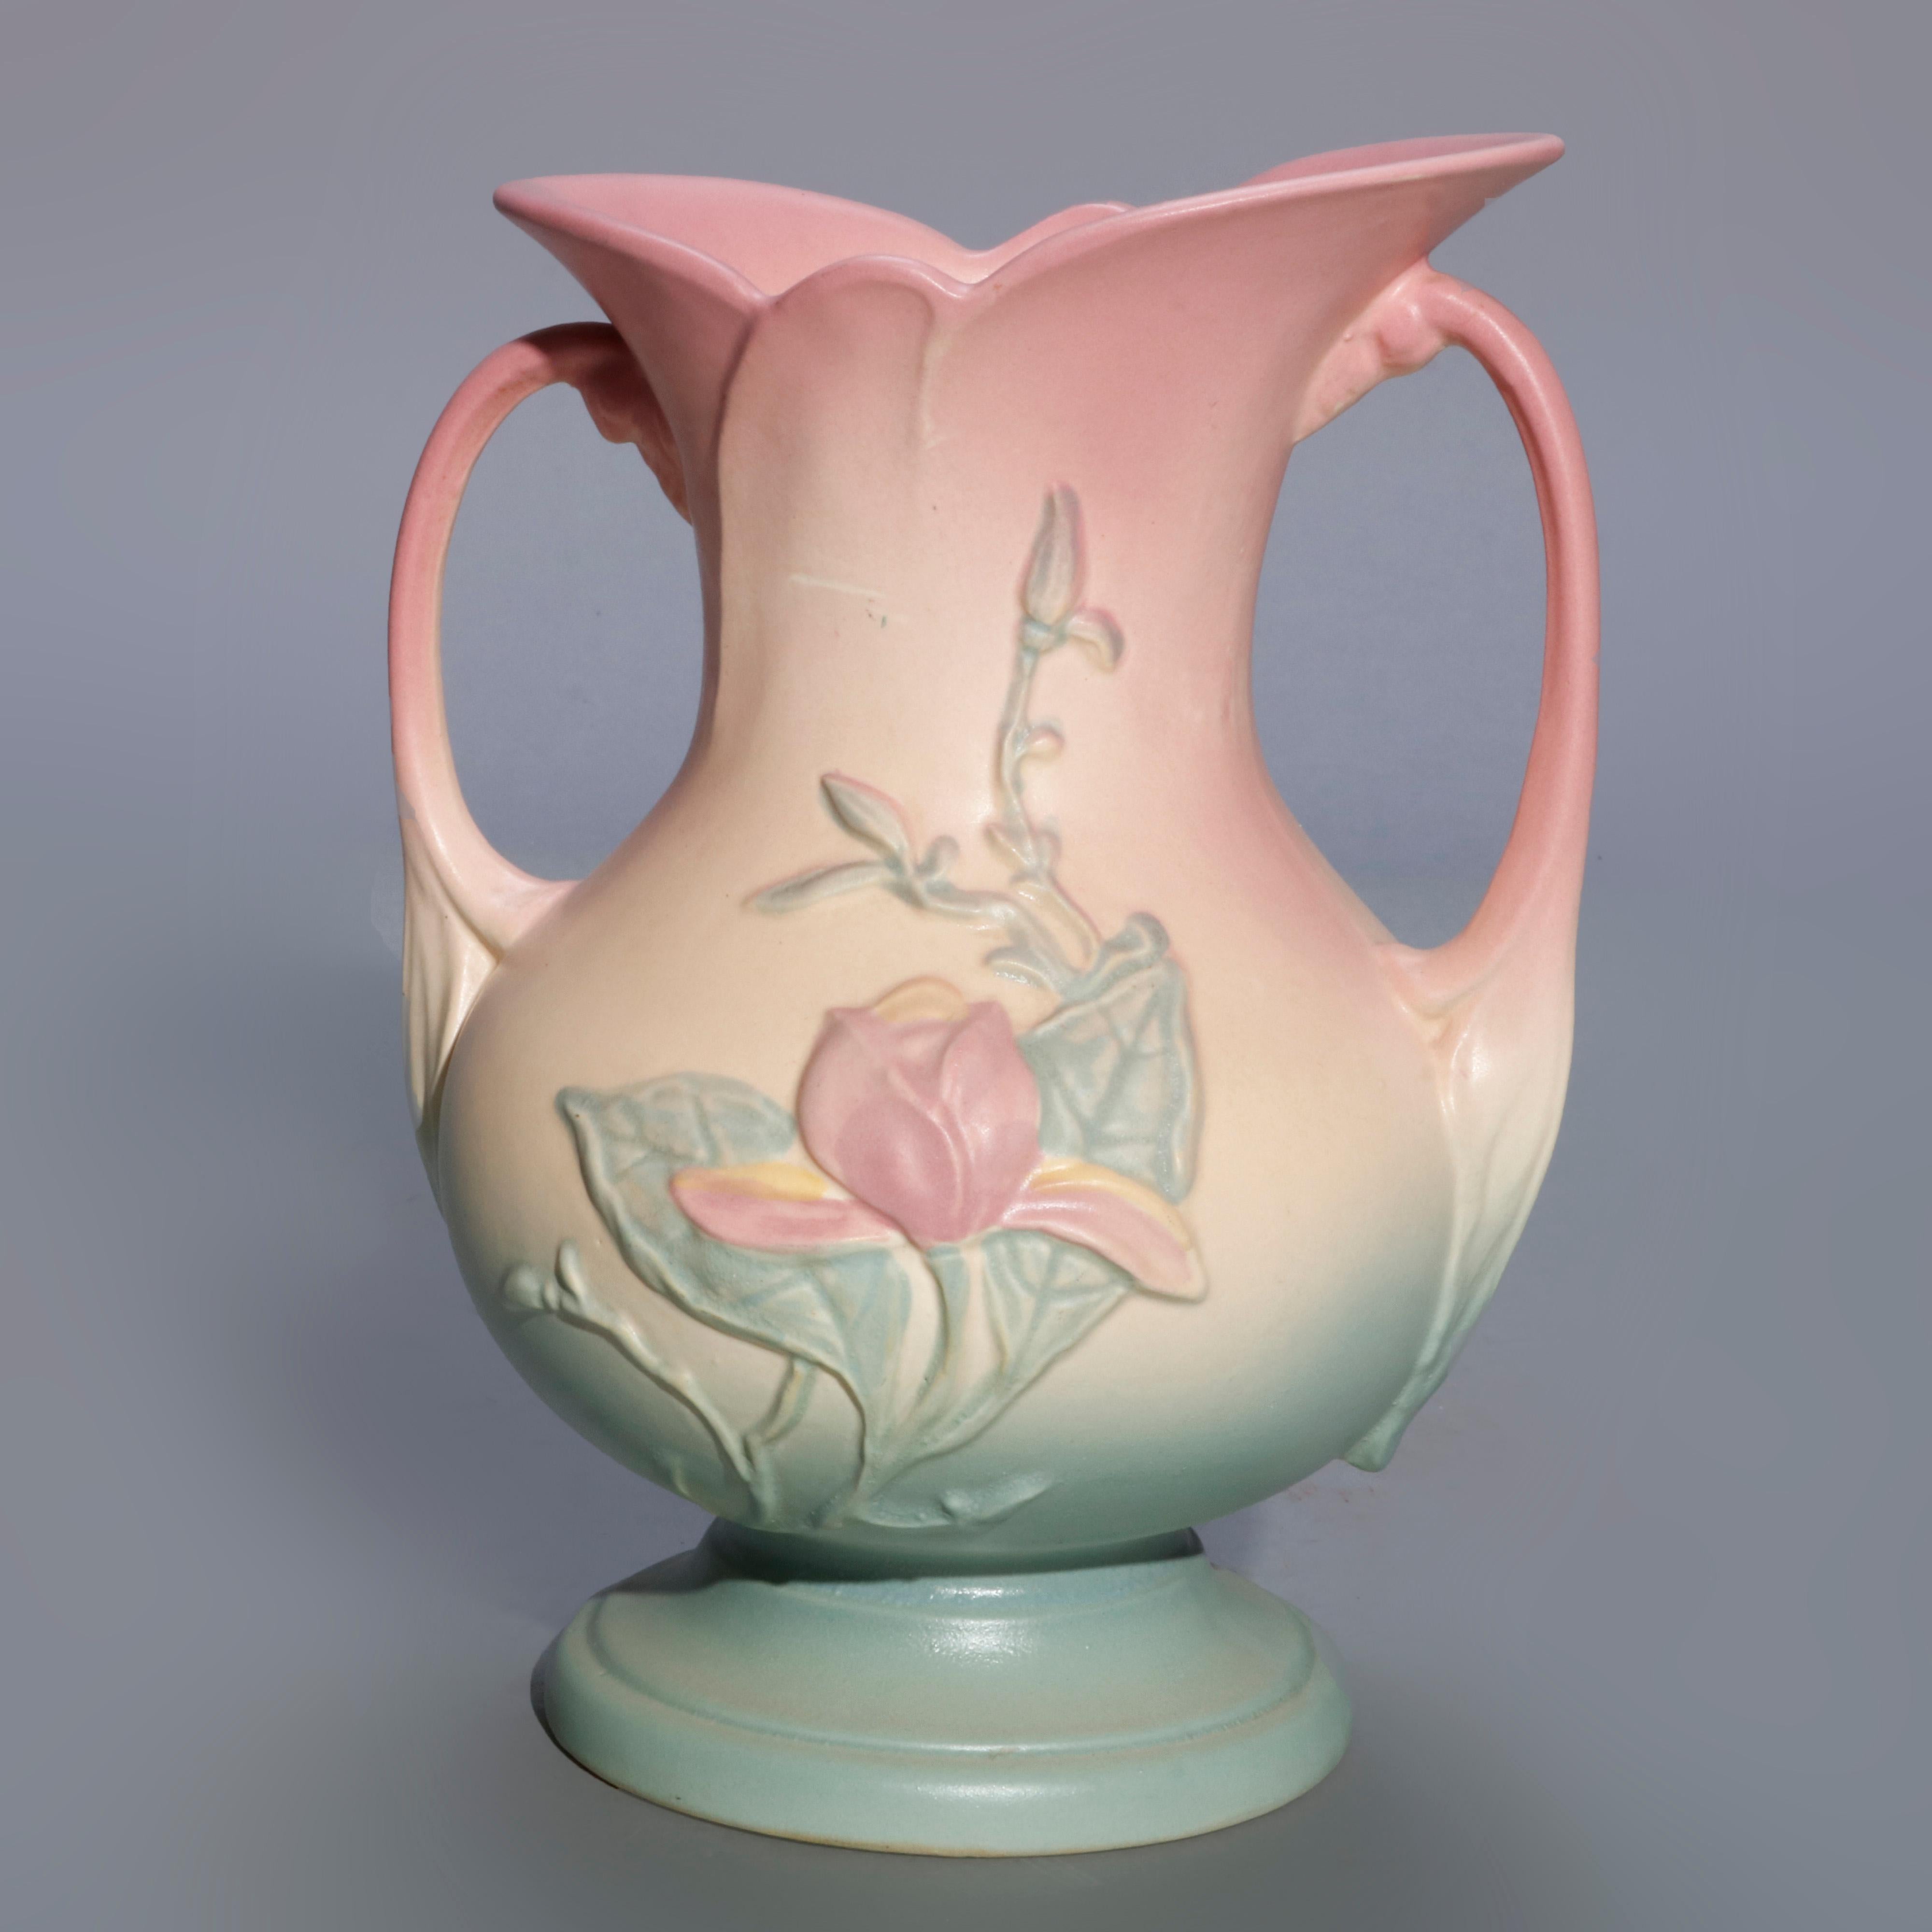 hull pottery vase